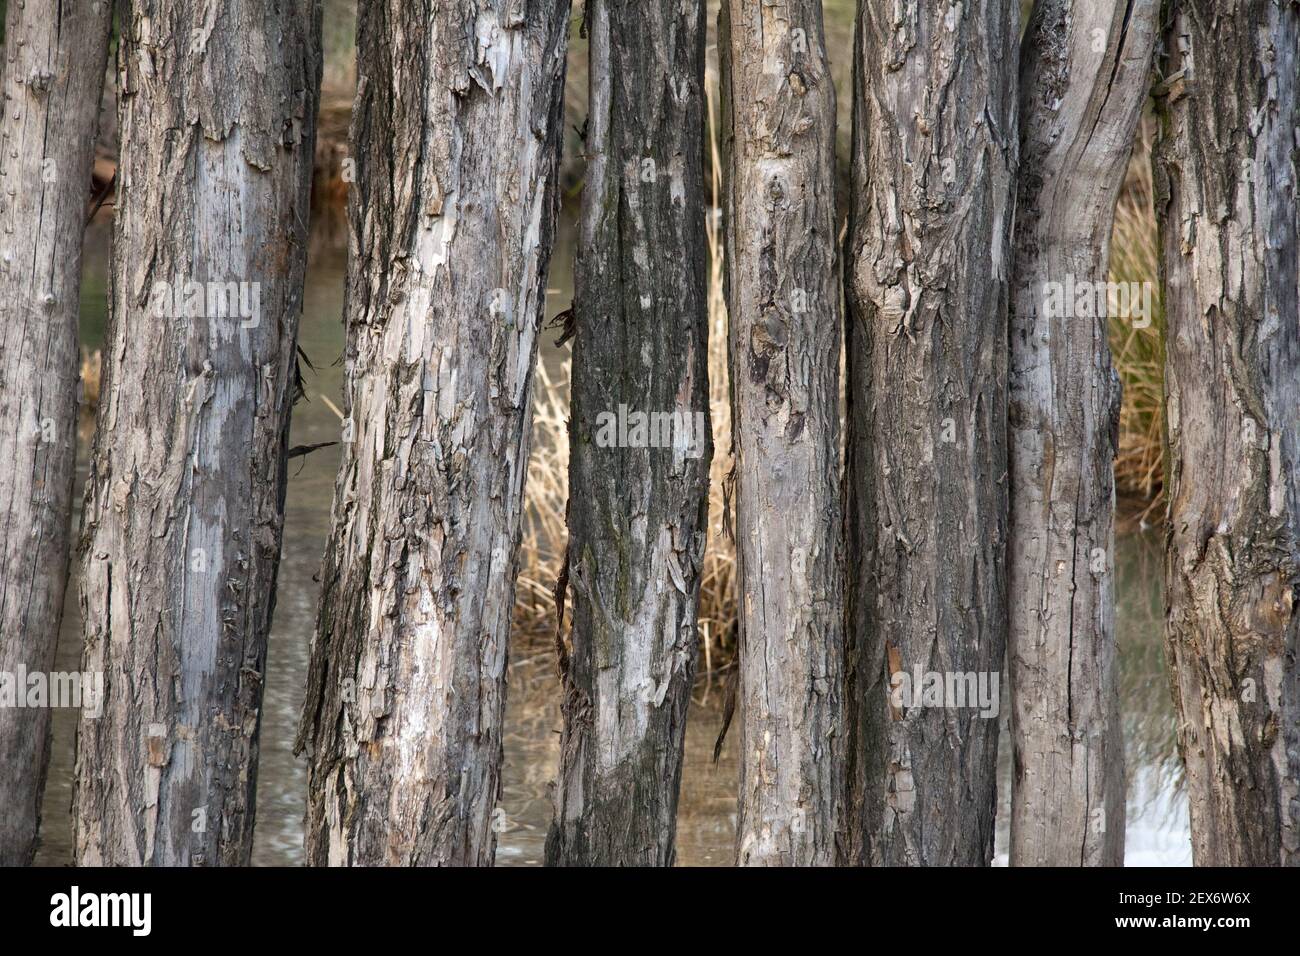 Wooden beams Stock Photo